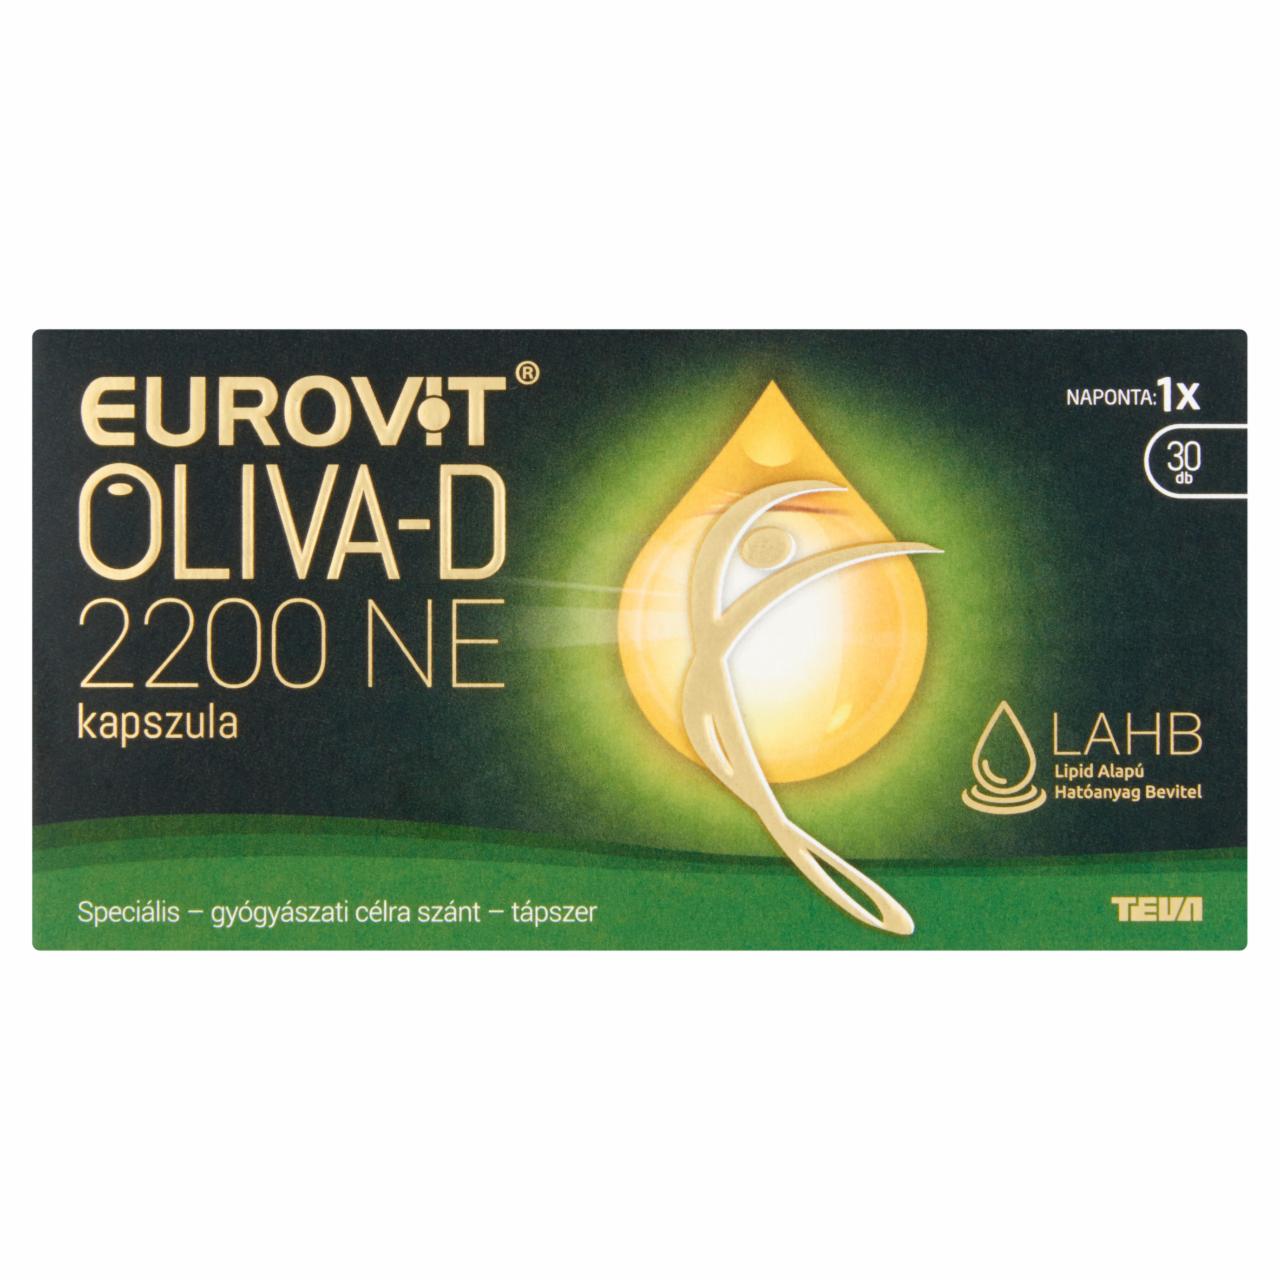 Képek - Eurovit Oliva-D 2200 NE kapszula 30 db